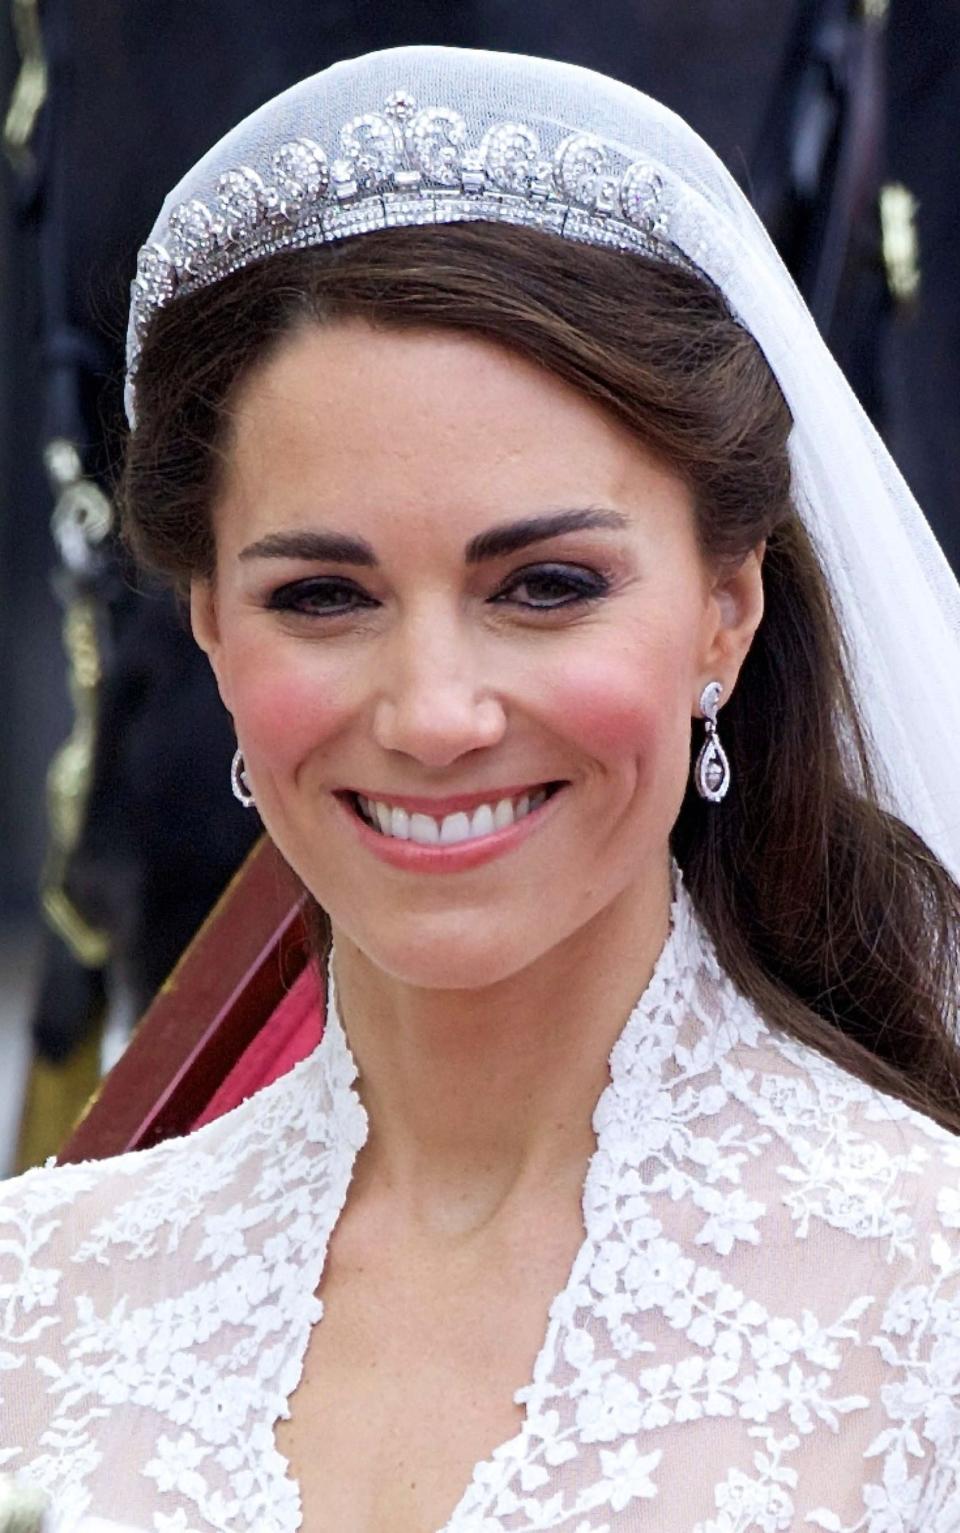 The Duchess of Cambridge on her wedding day wearing custom-made Robinson Pelham diamond earrings - Credit: Willi Schneider/REX/Shutterstock